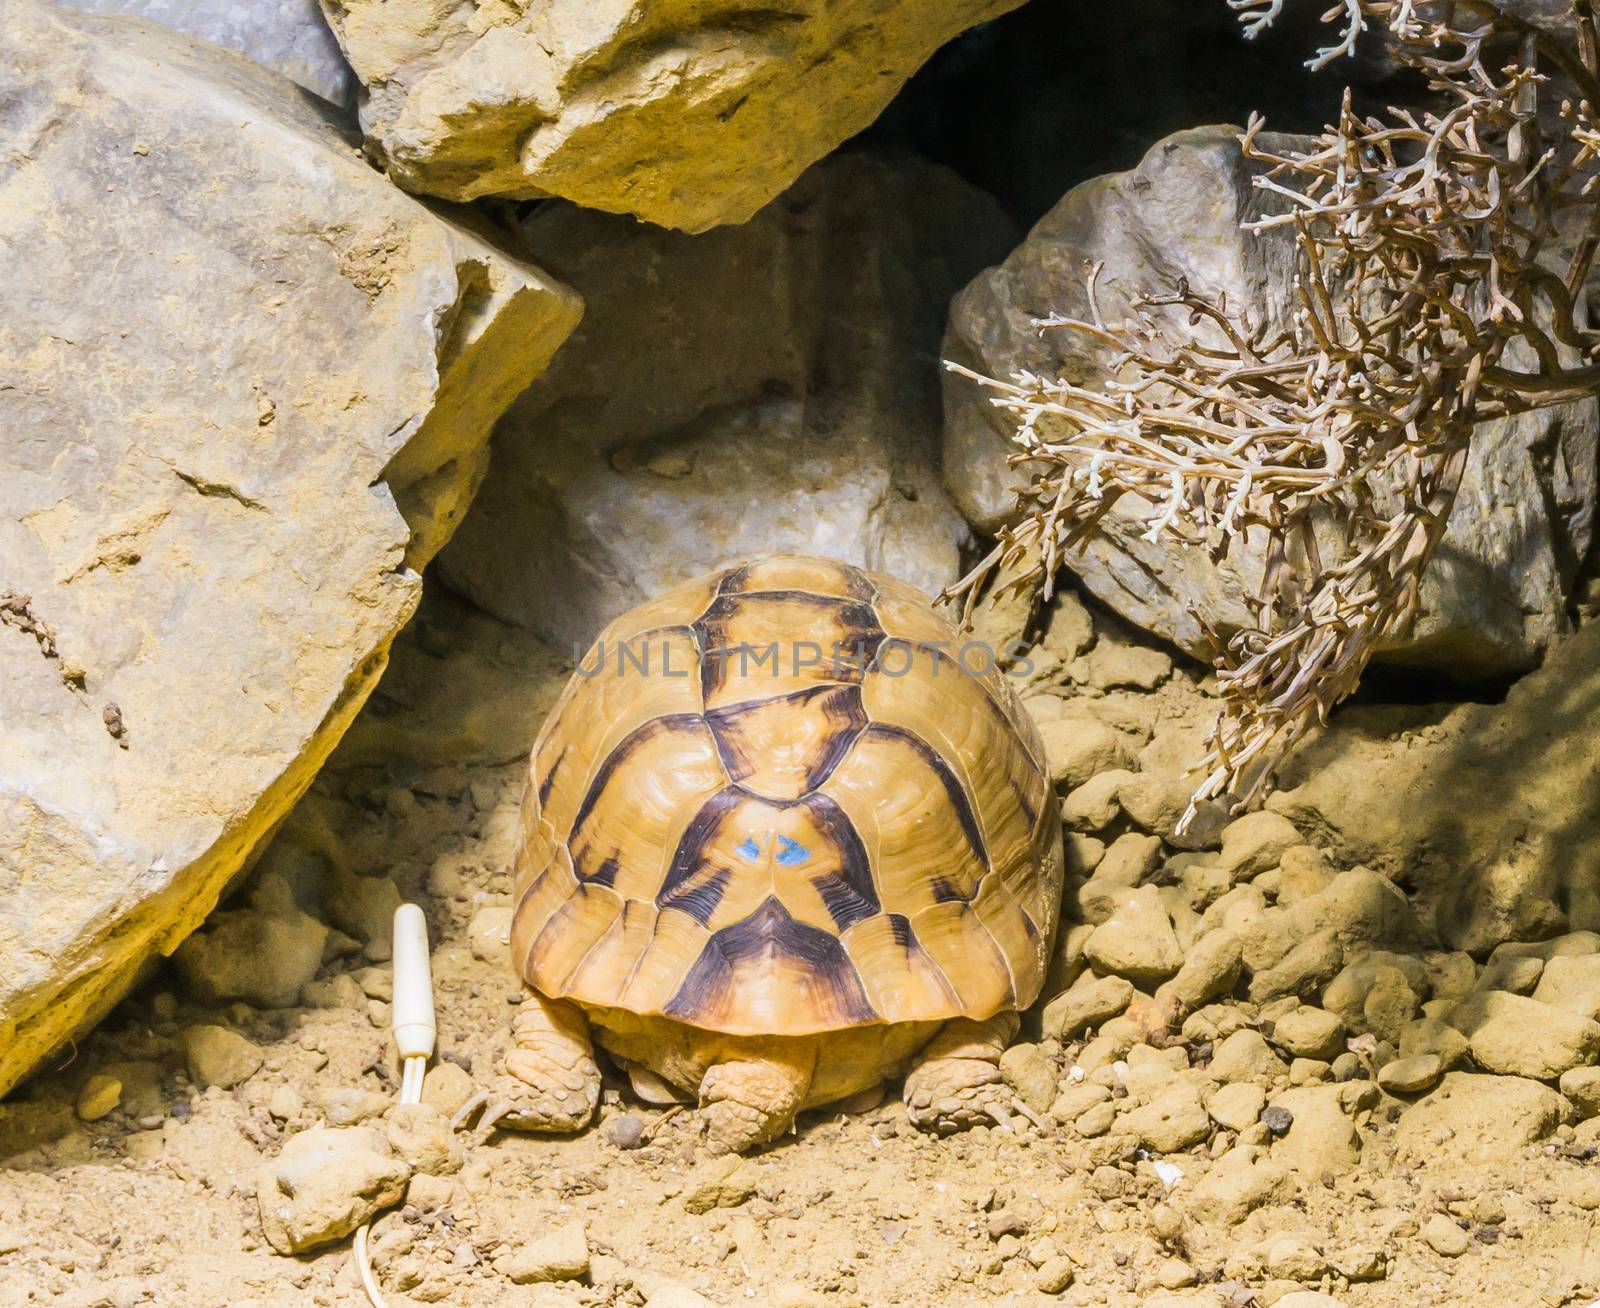 rare endangered egyptian tortoise turtle sleeping in the sand under some rocks